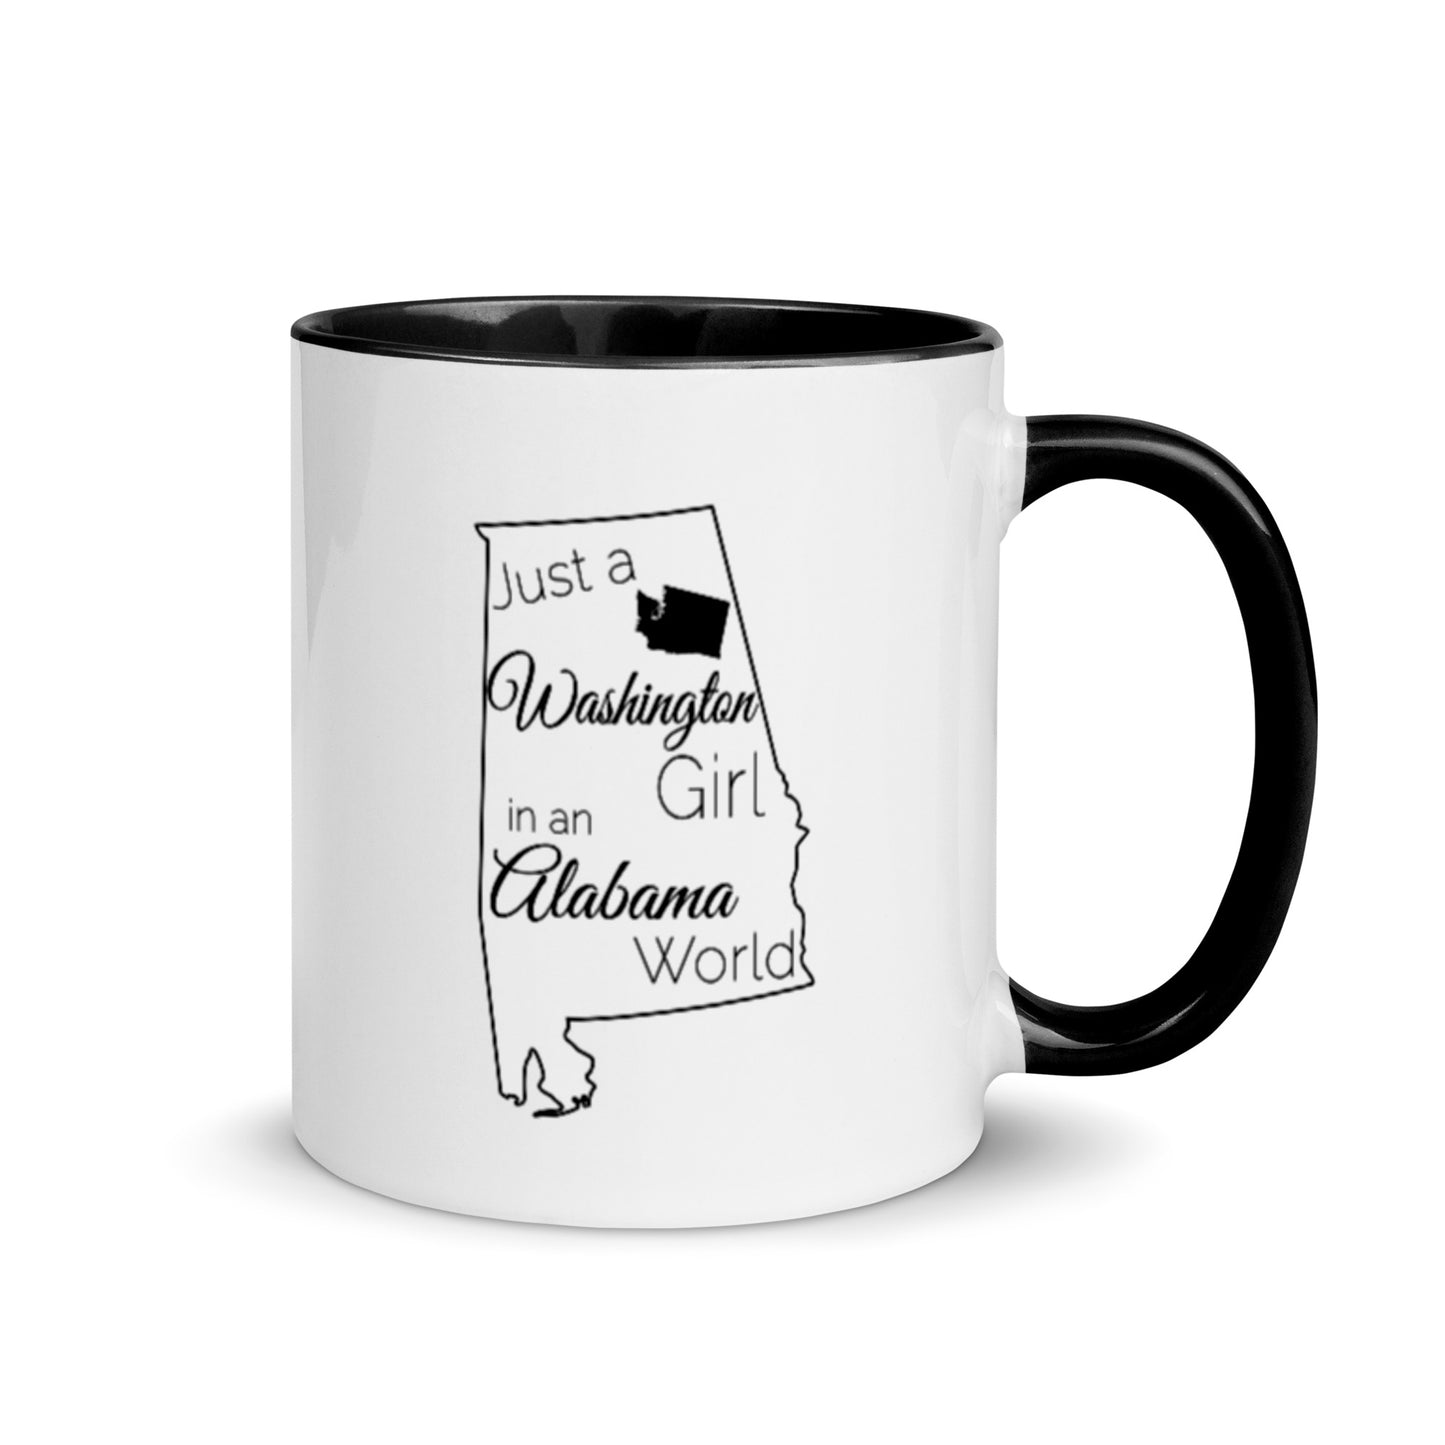 Just a Washington Girl in an Alabama World Mug with Color Inside